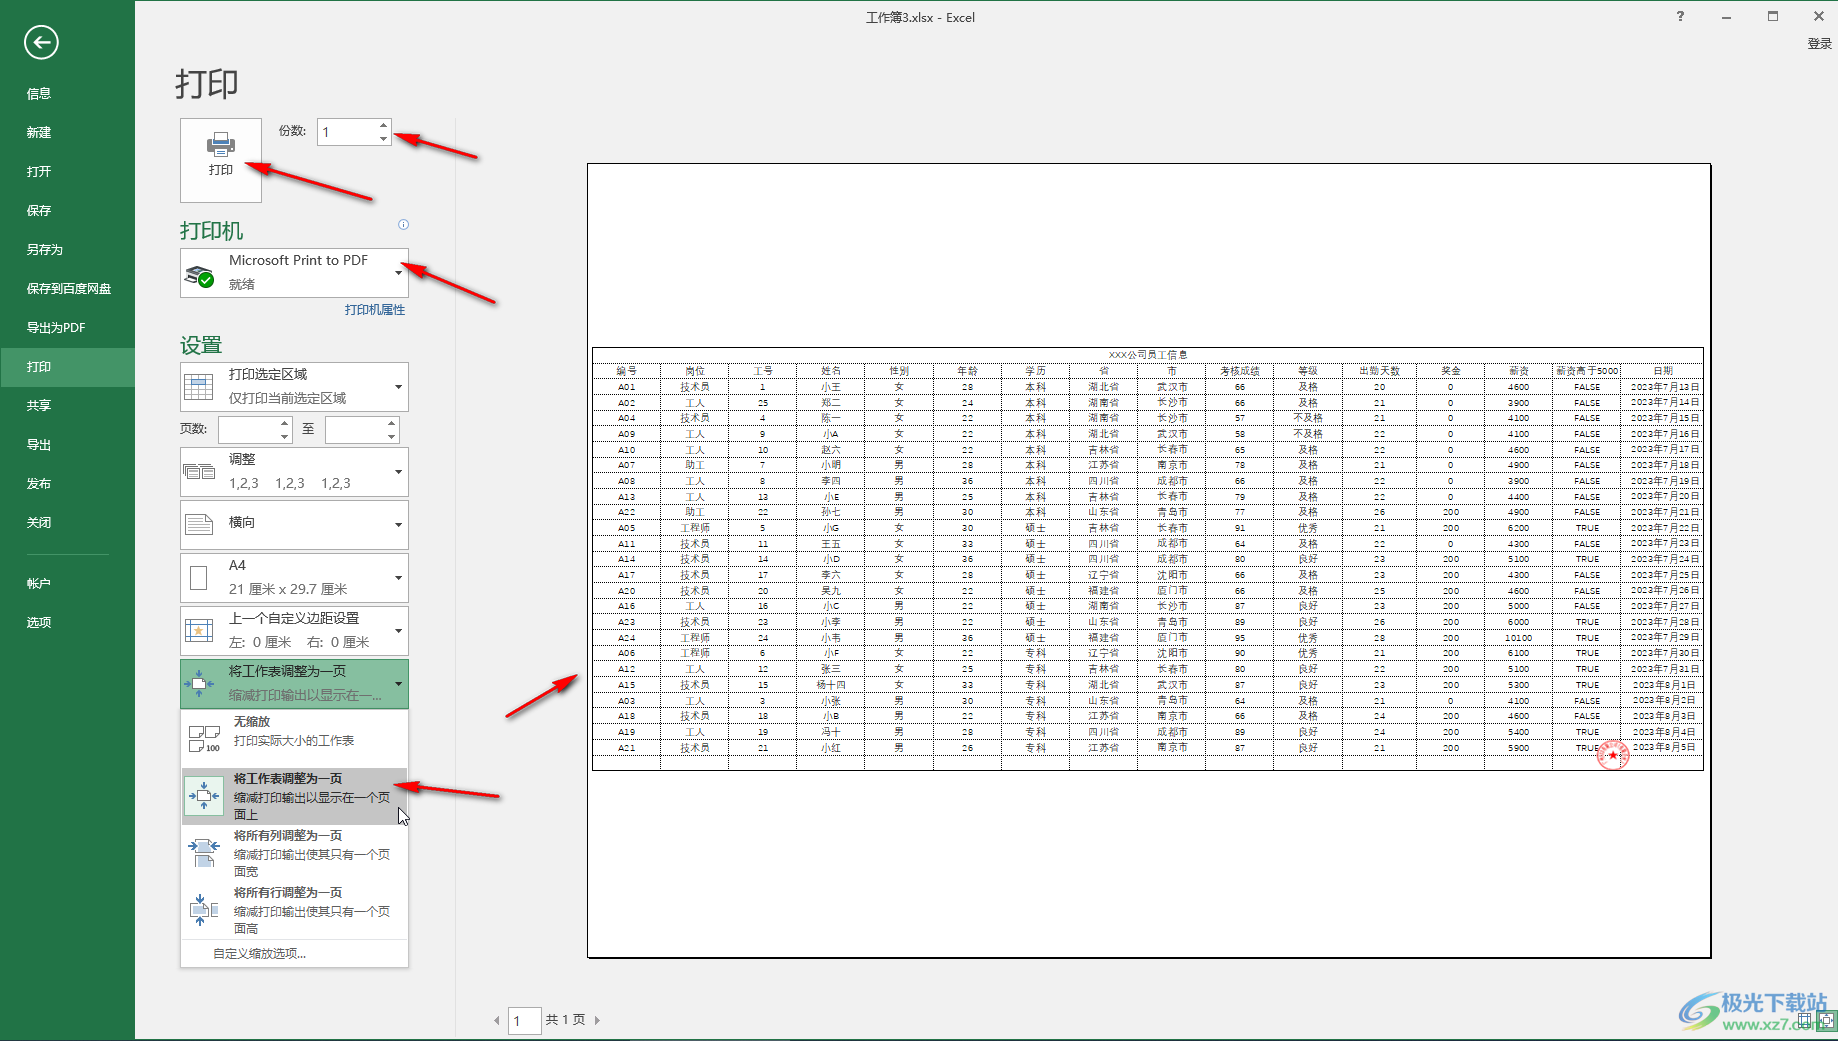 Excel VBA的基本操作界面 - 知乎